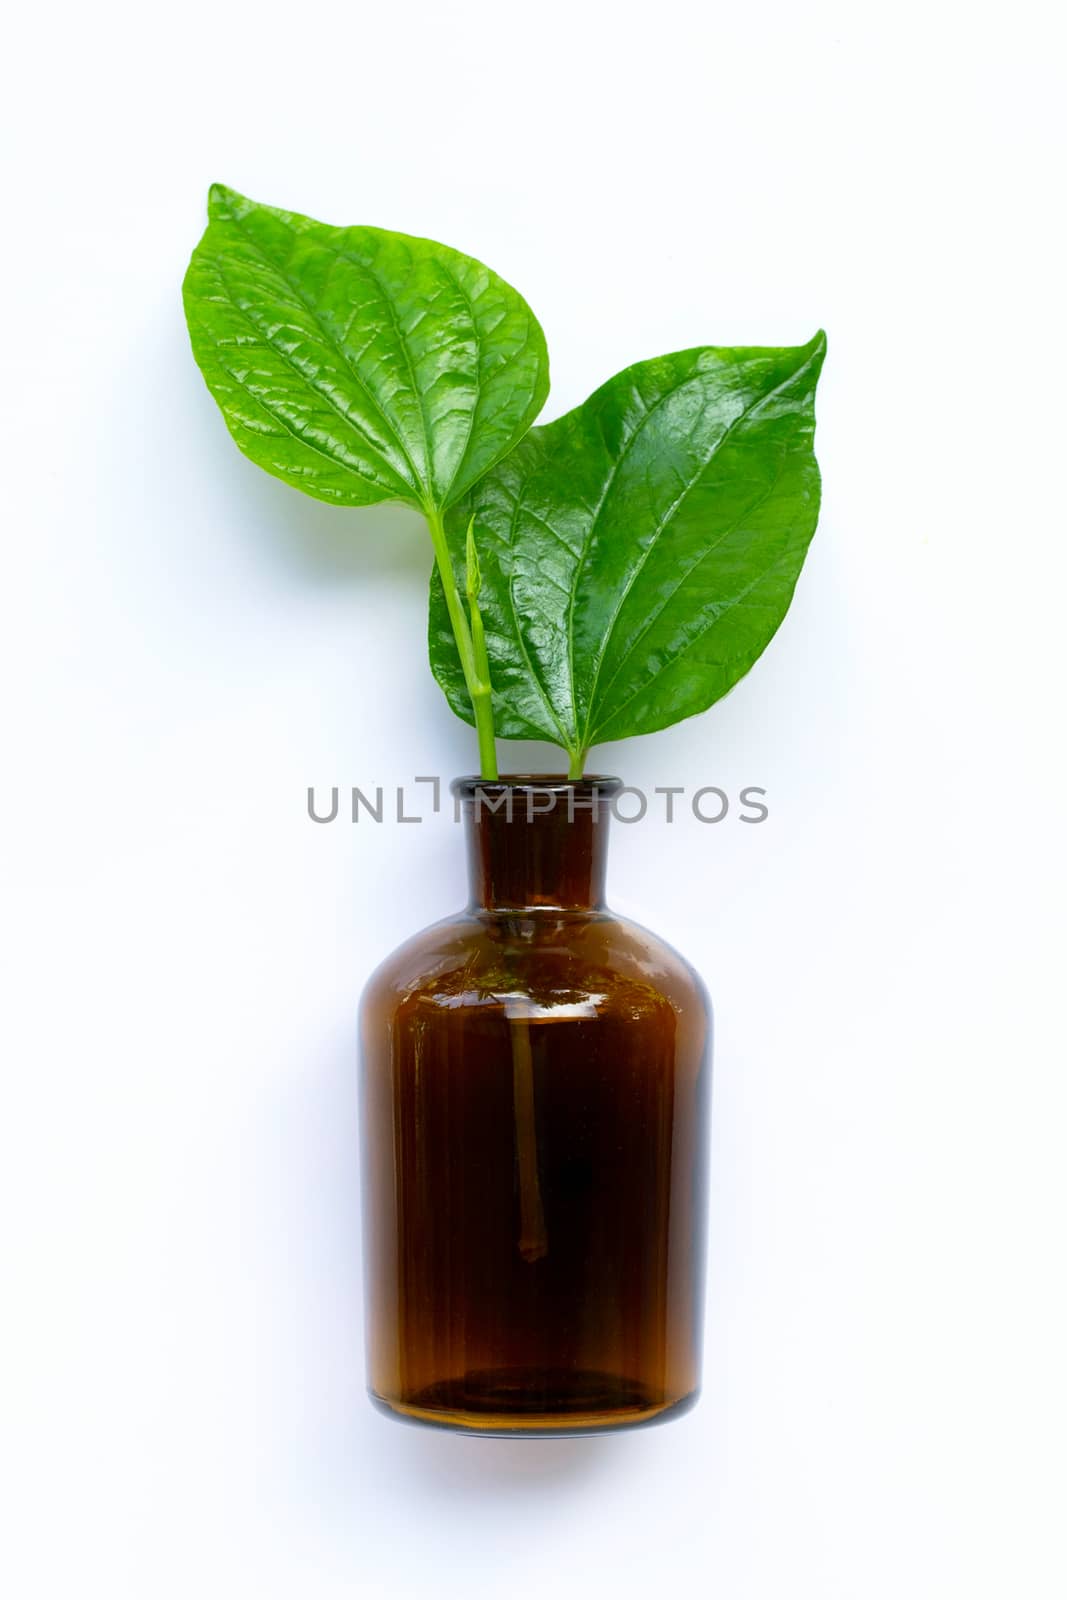 Fresh piper sarmentosum or wildbetal leafbush with essential oil bottle on white background.